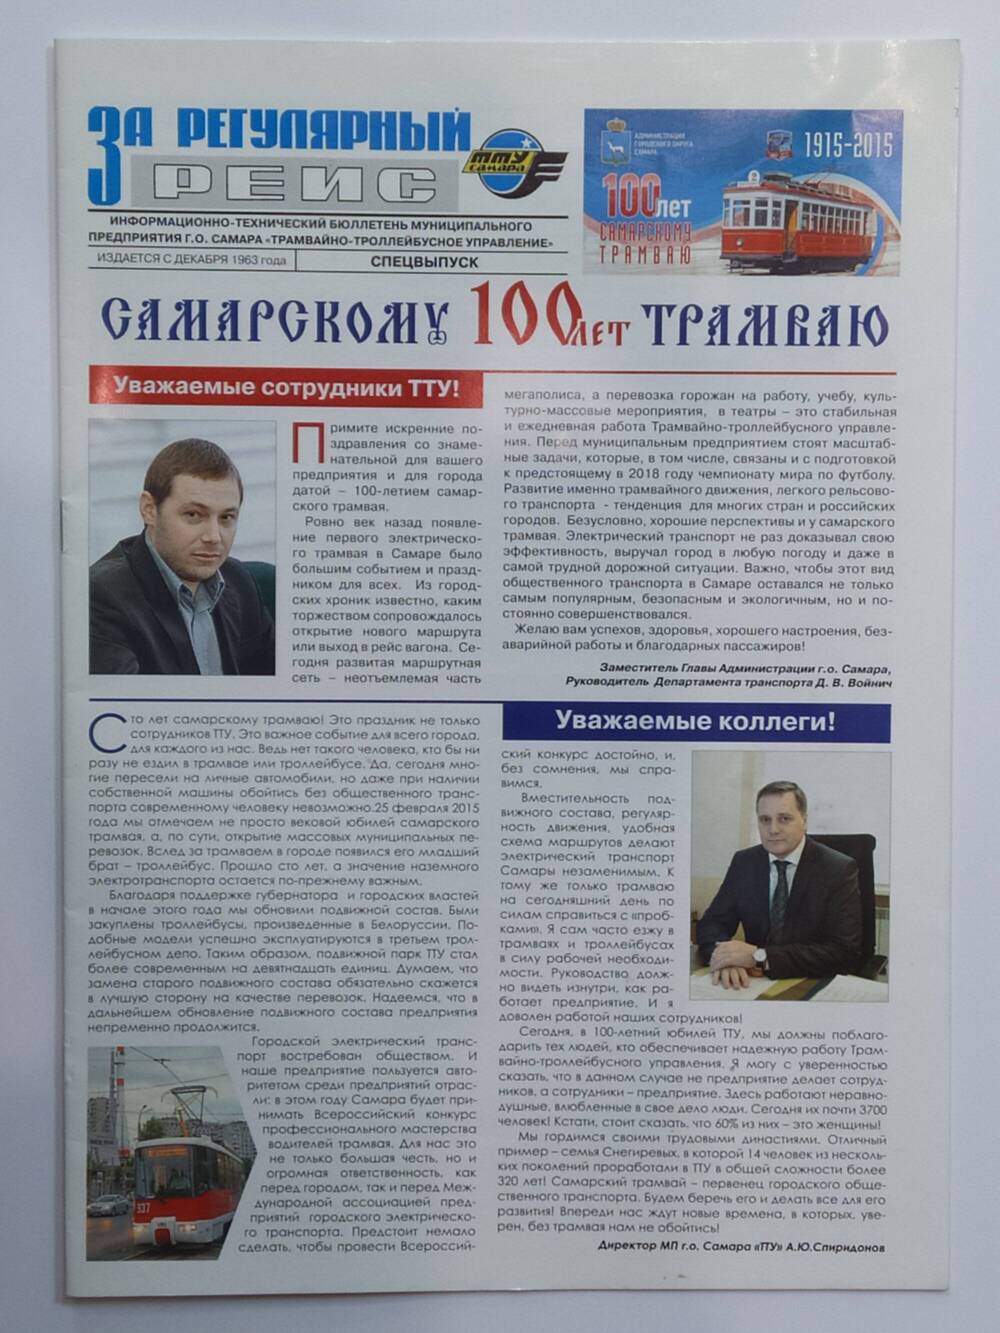 Бюллетень За регулярный рейс. Спецвыпуск Самарскому трамваю 100 лет.